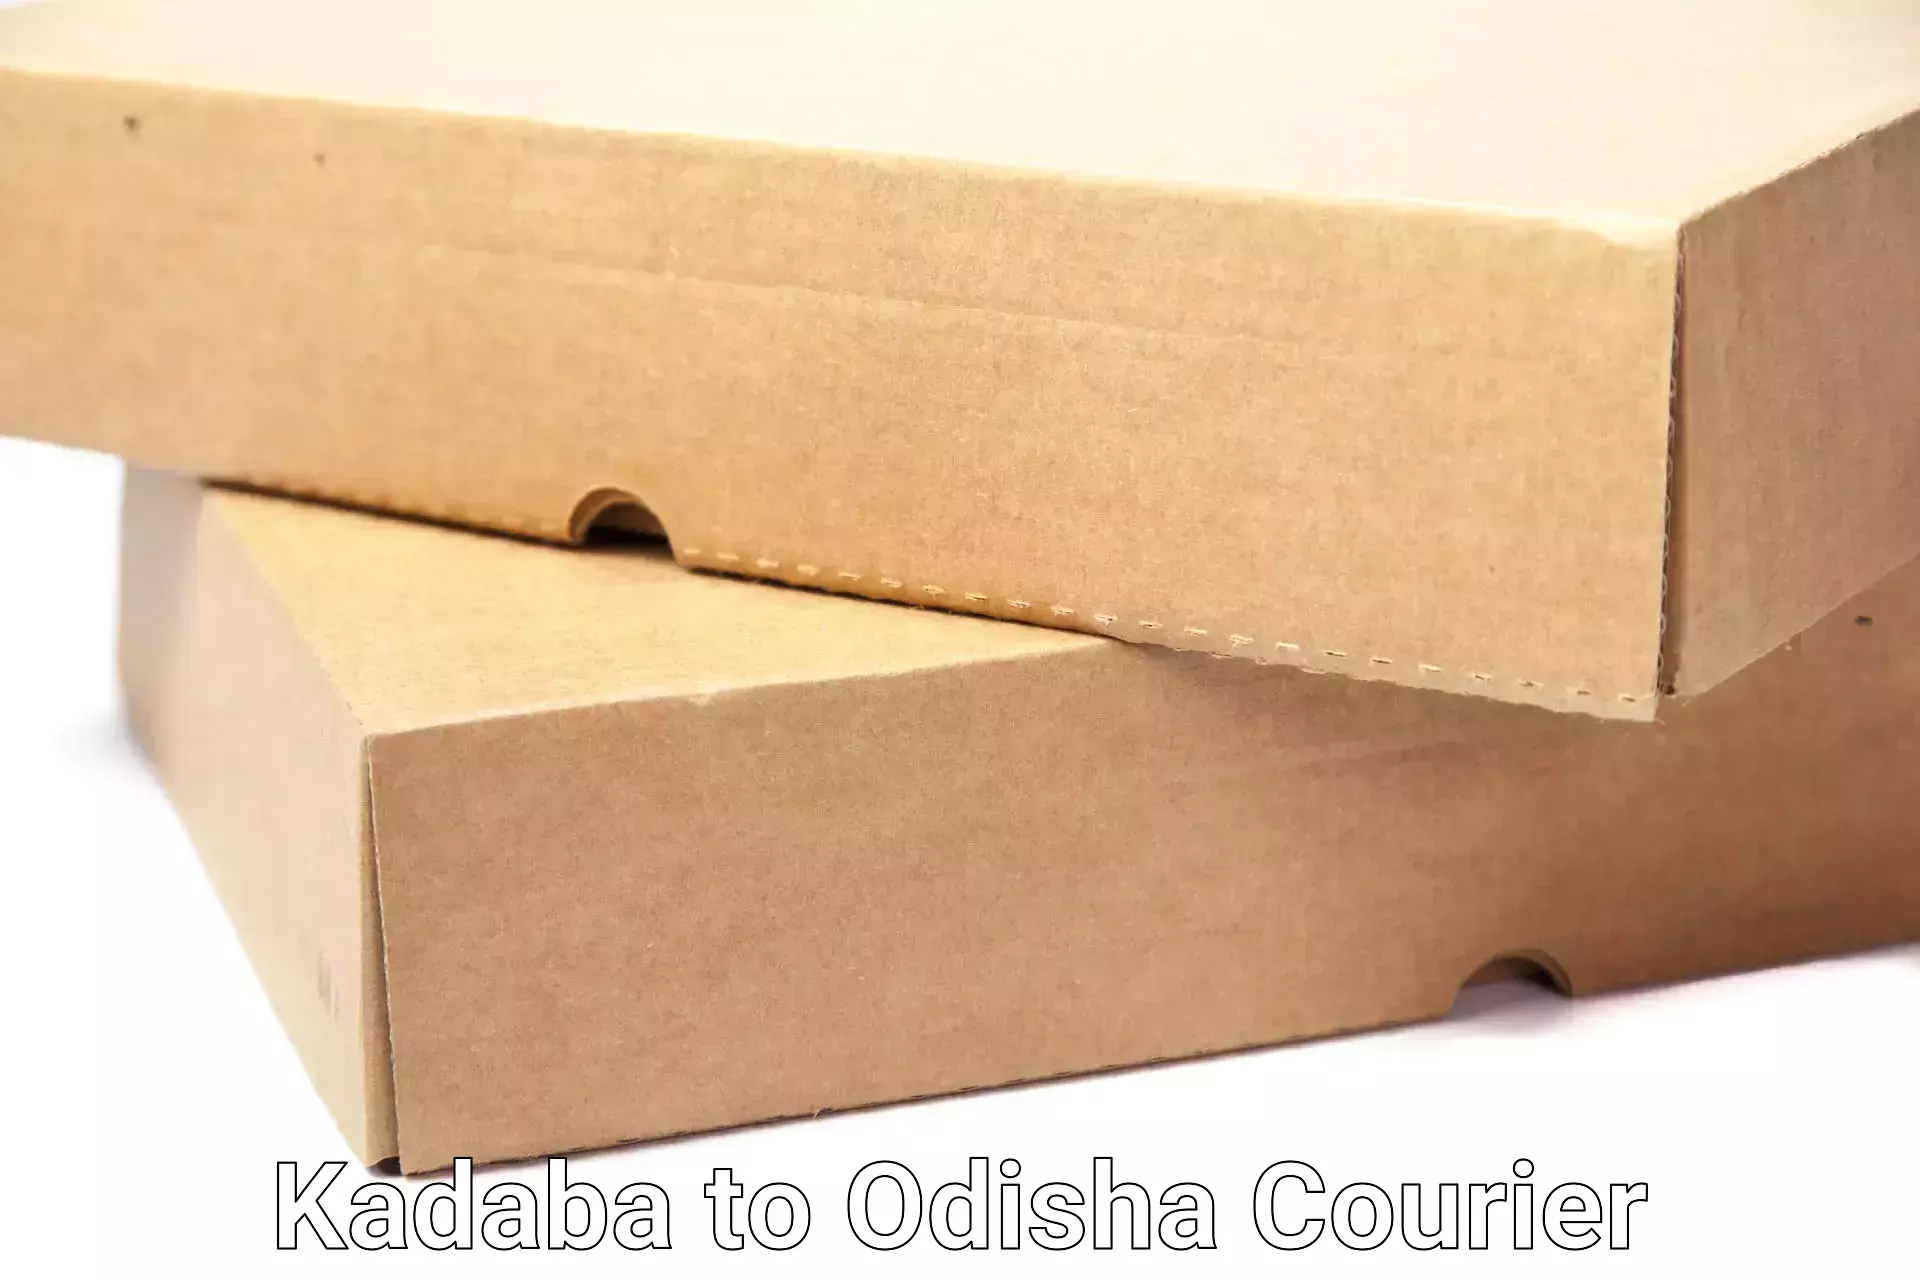 Furniture moving experts Kadaba to Asika